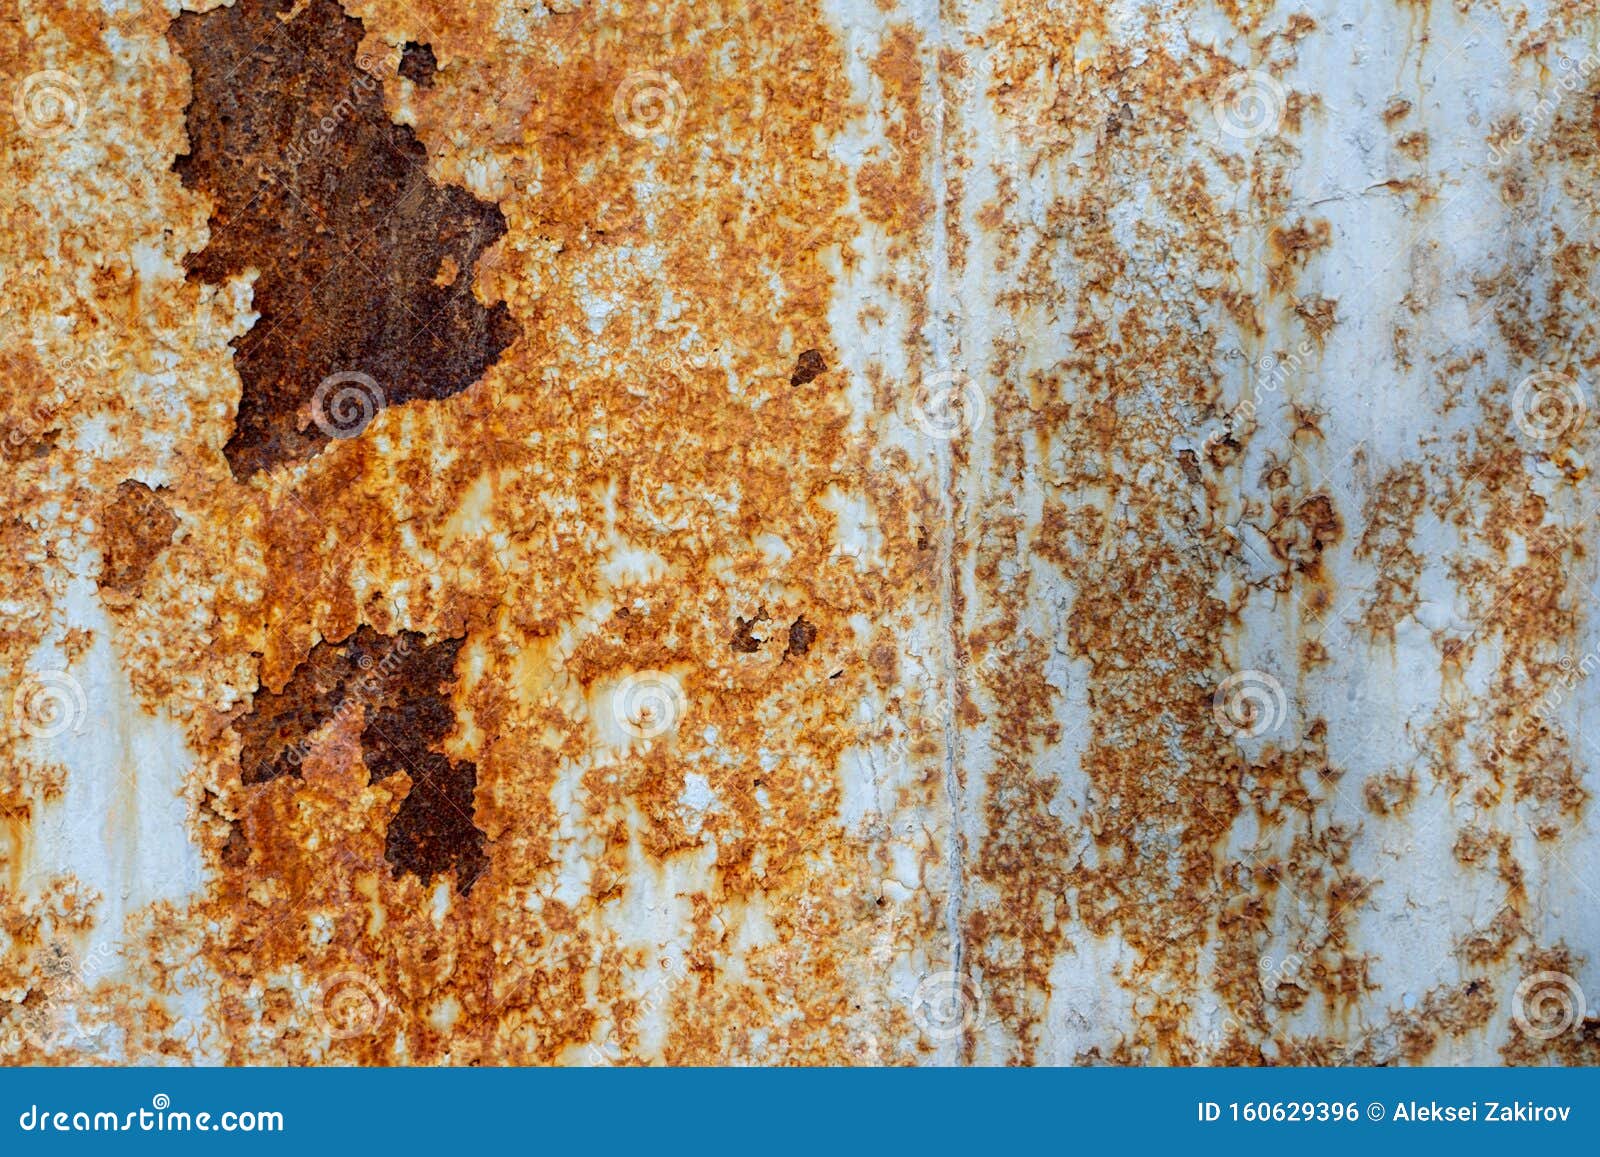 Can sheet metal rust фото 117